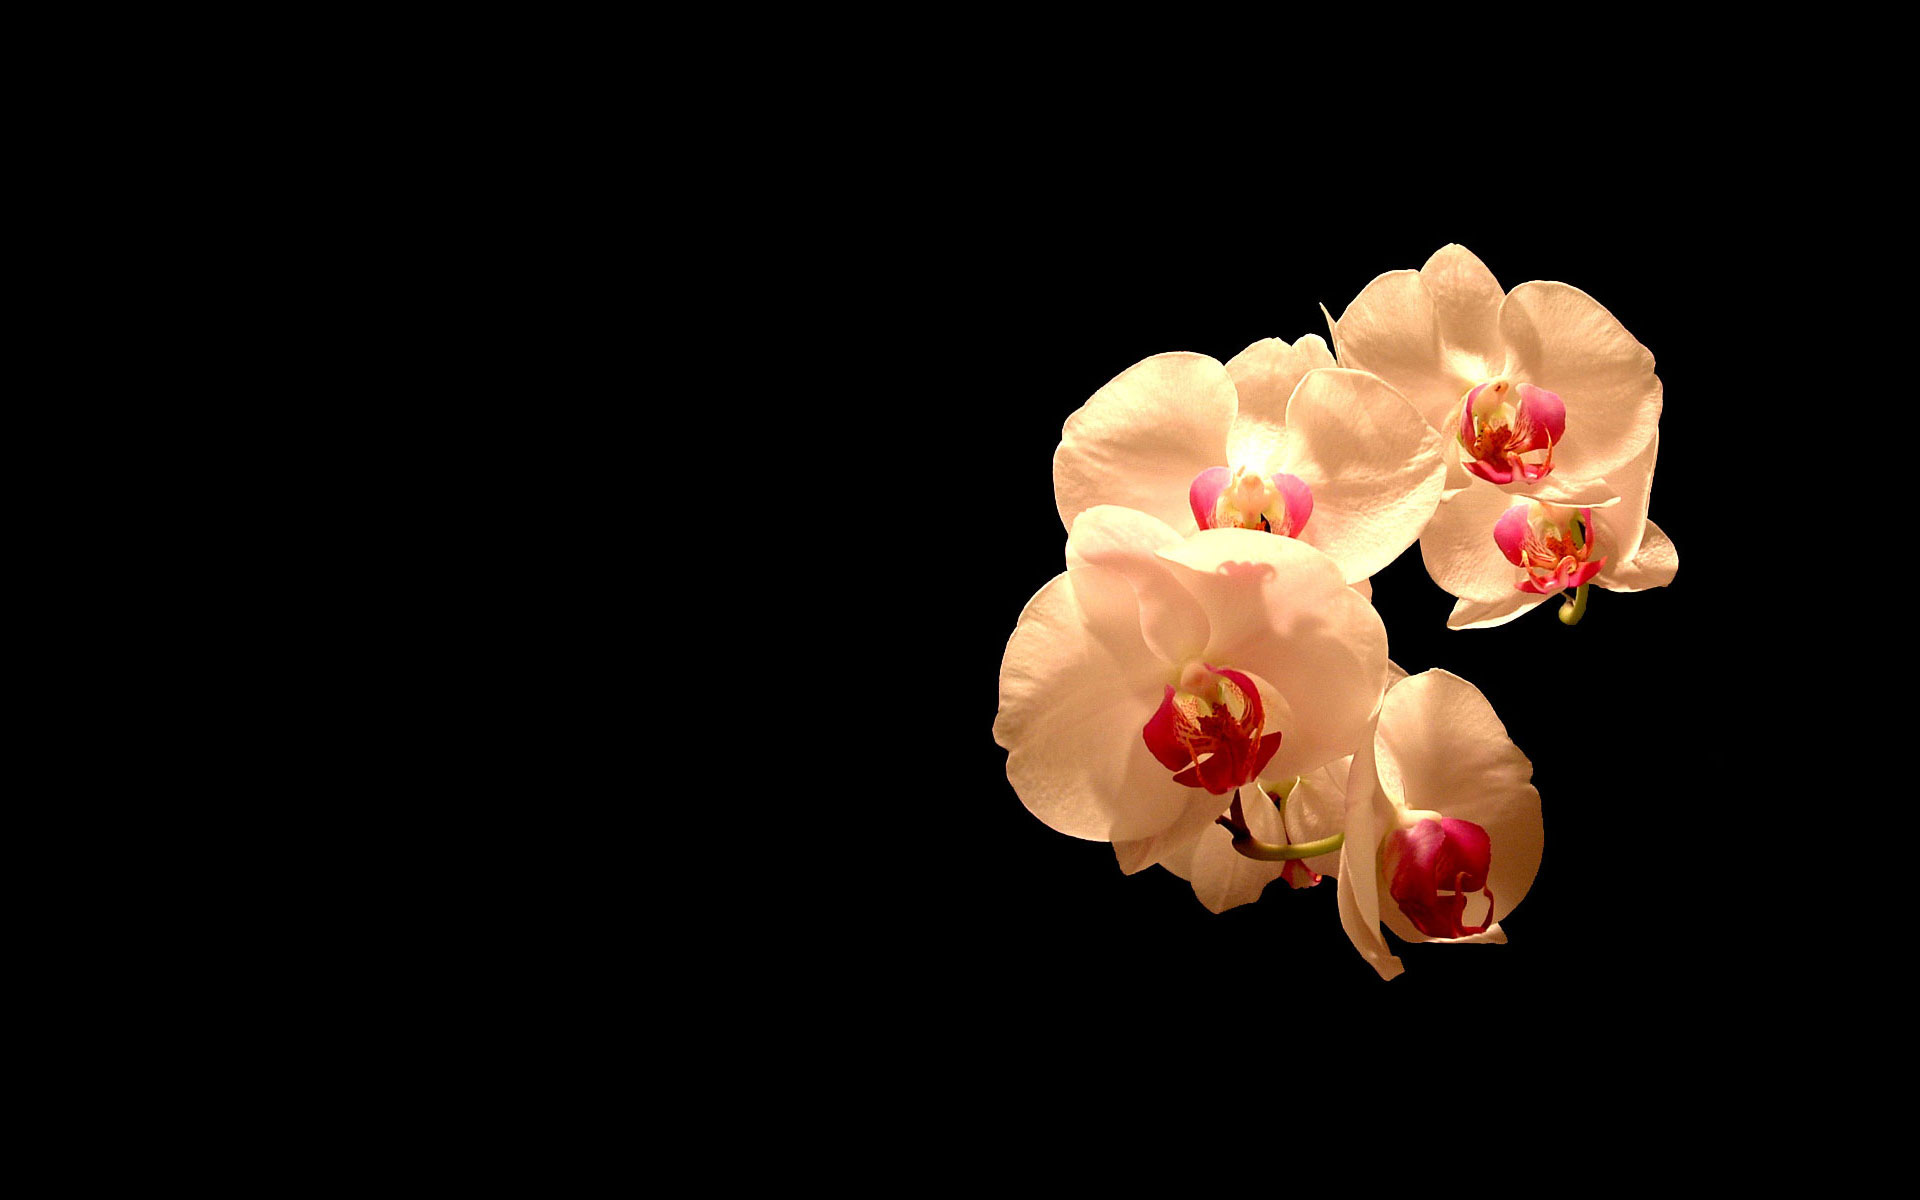 Nature desktop wallpaper featuring a vibrant orchid flower.